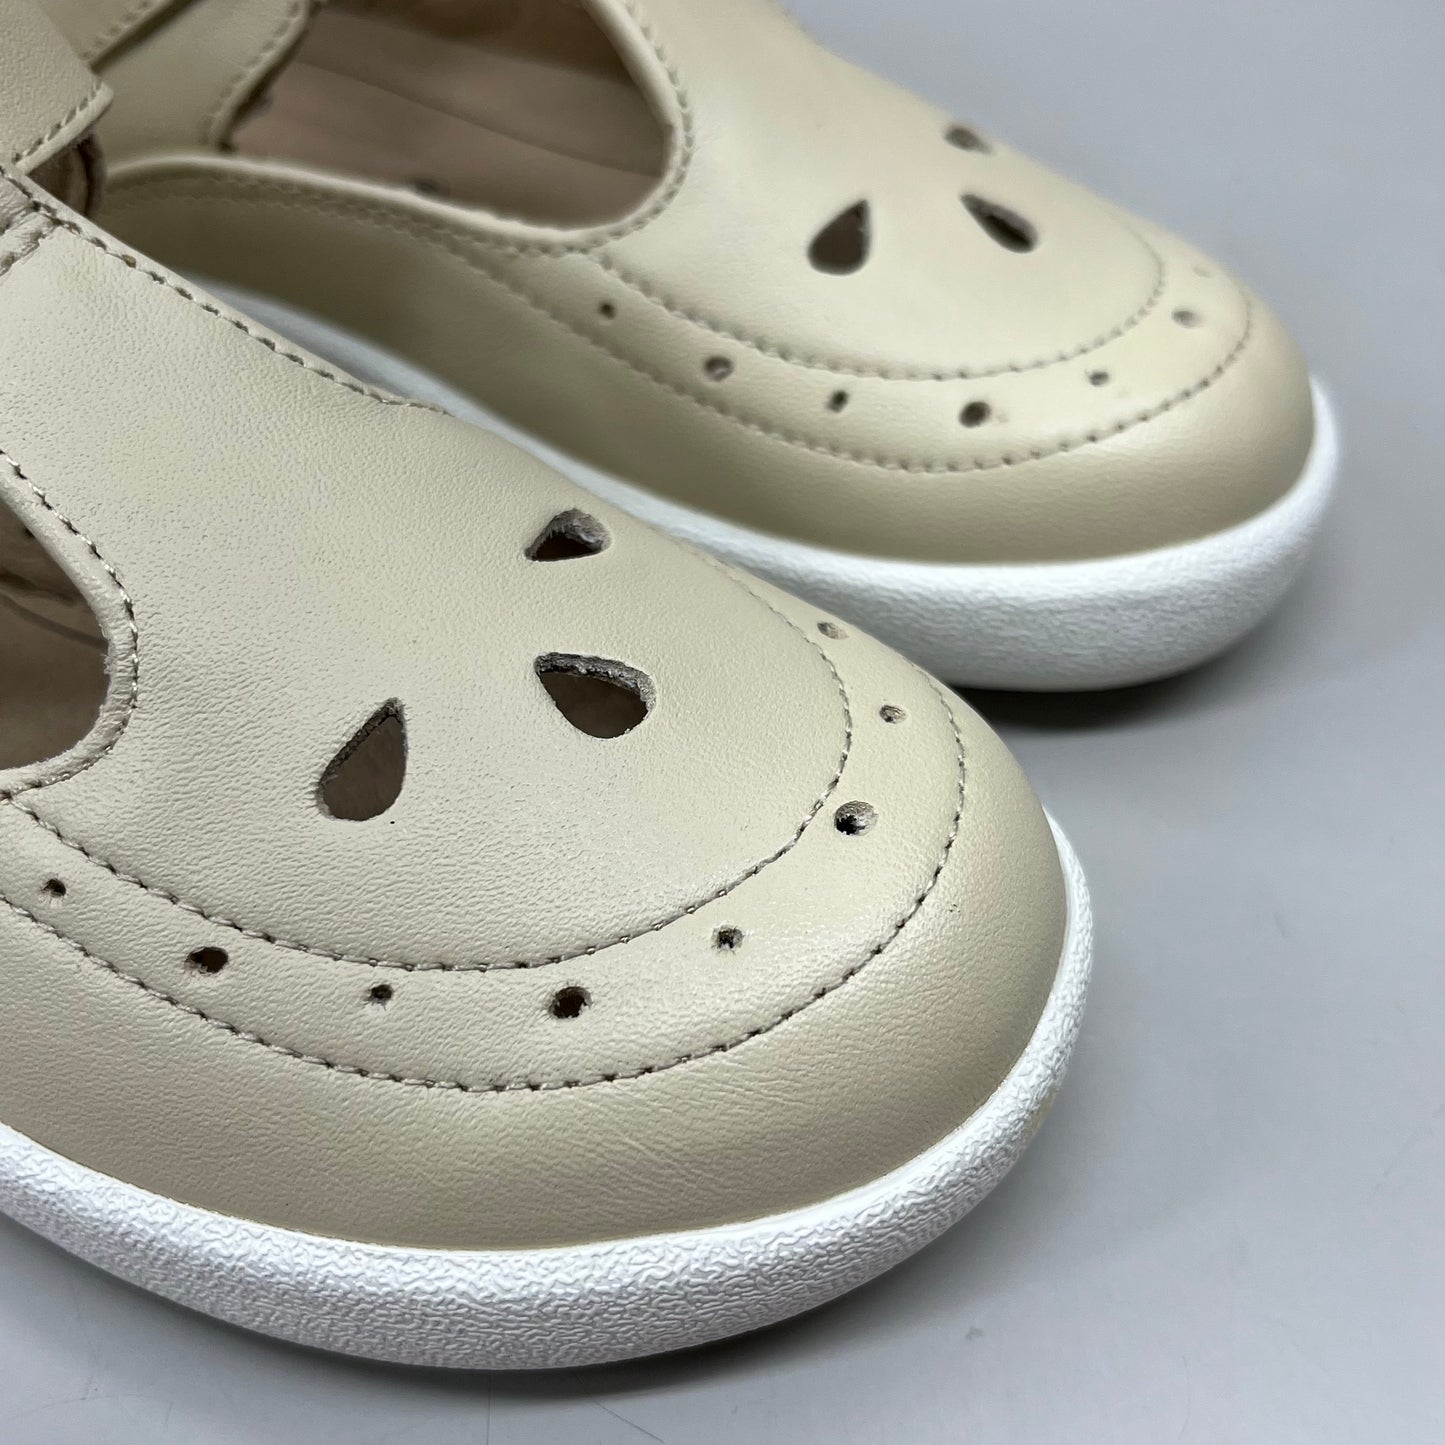 OLD SOLES Royal Adjustable T Strap Leather Shoe Kid's Sz 29 US 12 Cream #5011